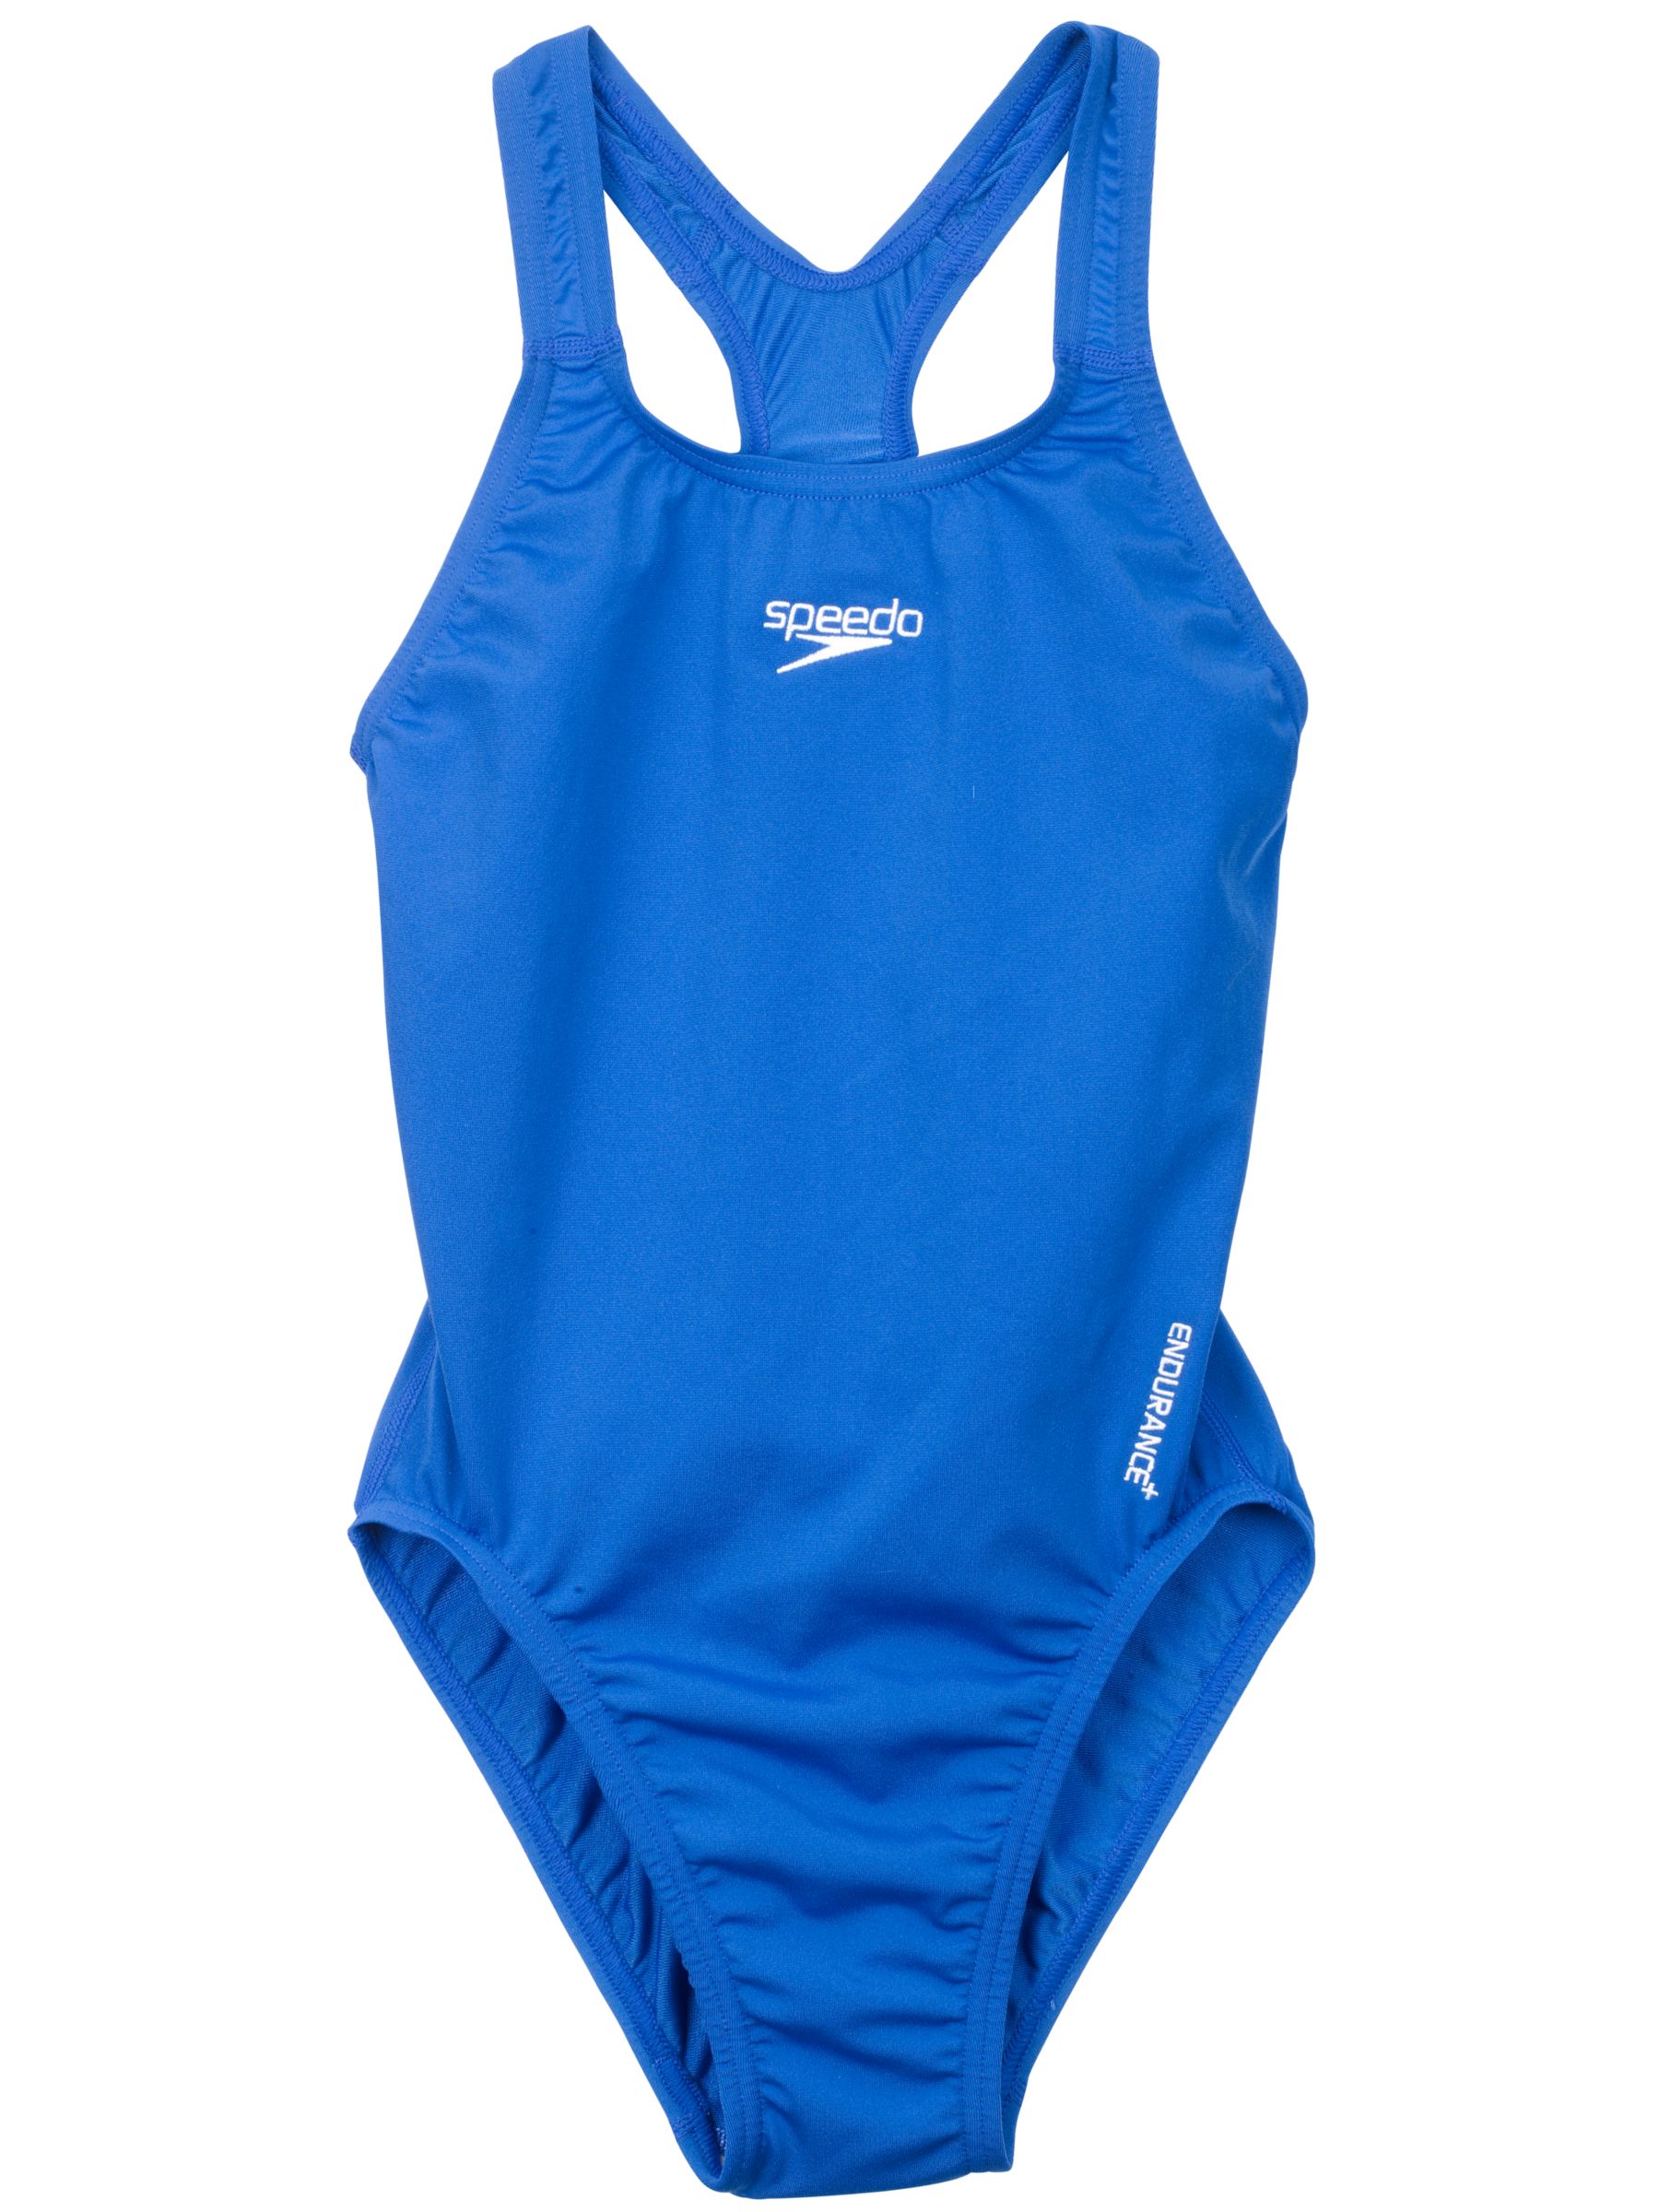 Speedo Medalist Swimsuit, Blue, 8 Years